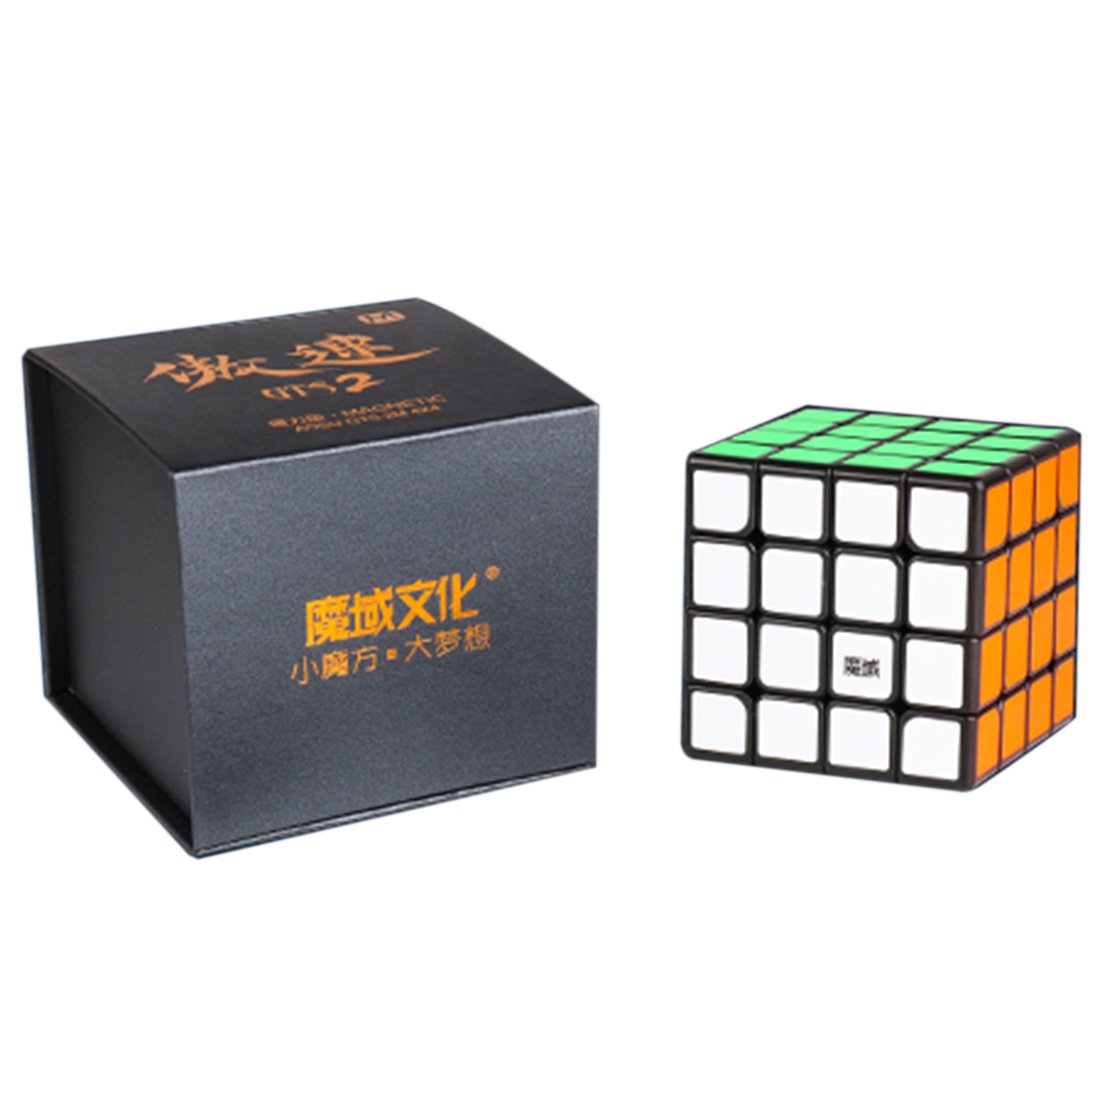 Yj8267 Moyu Aosu Gts2 M 4X4 Magic Cube - Magnetic Version Black